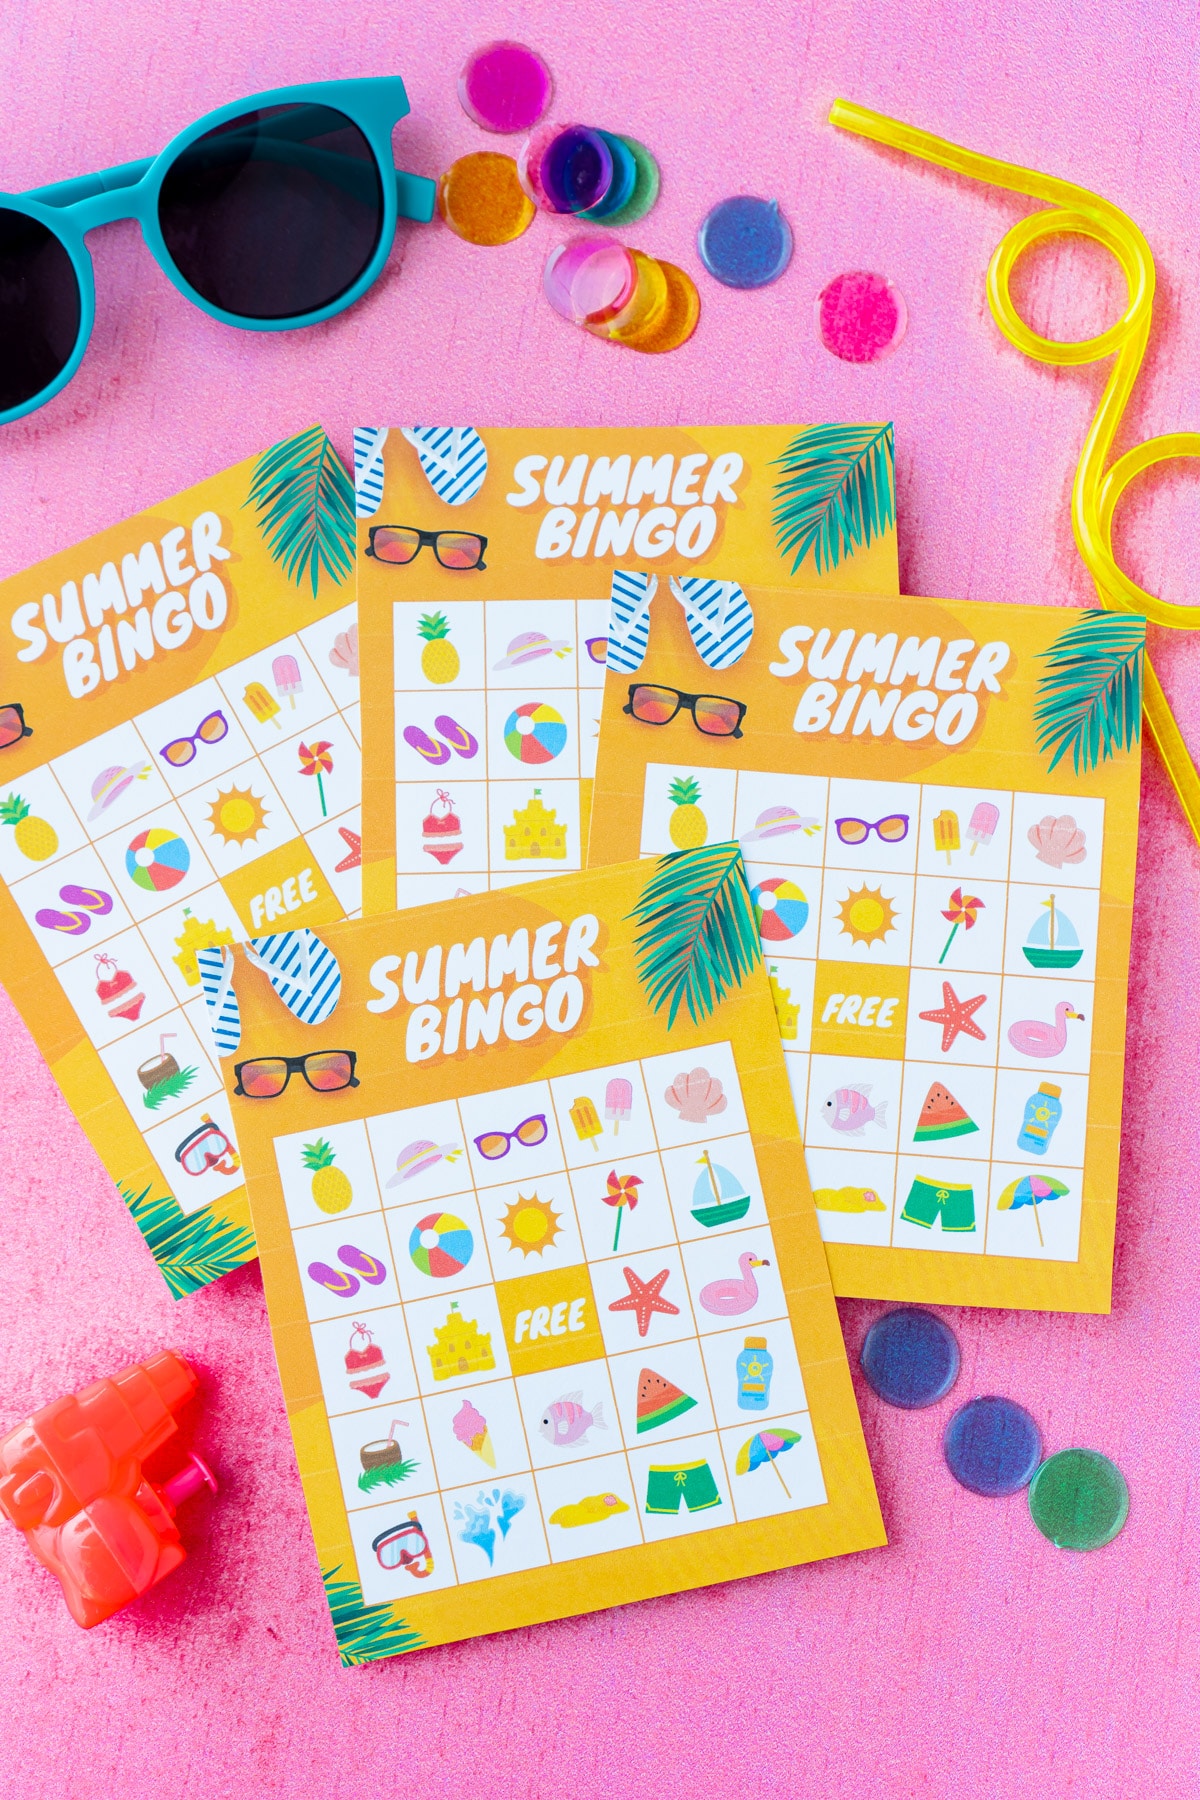 Four orange summer bingo cards with sunglasses and bingo markers